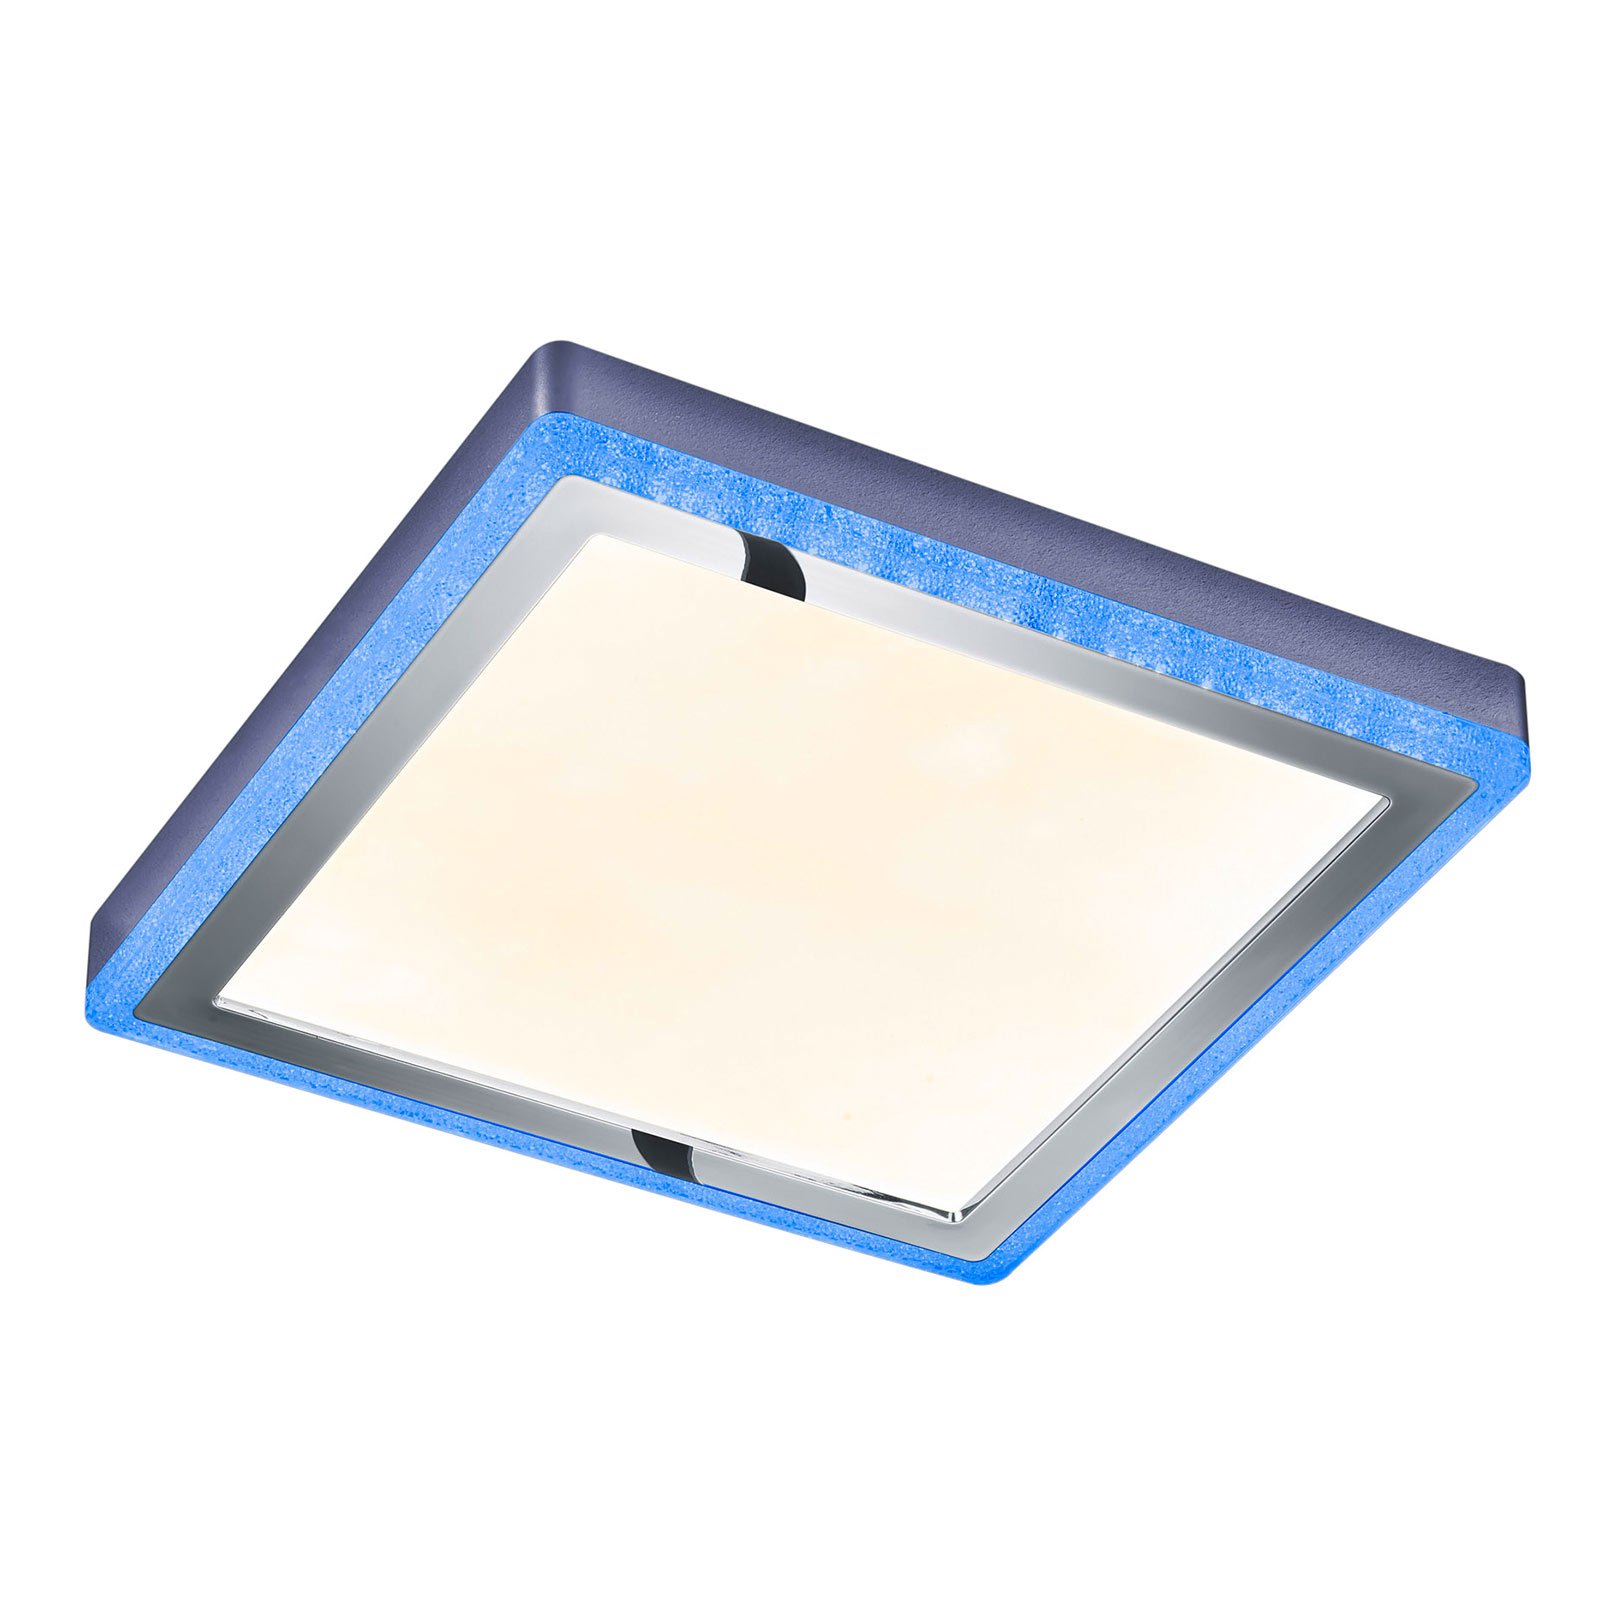 Plafoniera LED Slide, bianca, angolare, 40x40 cm